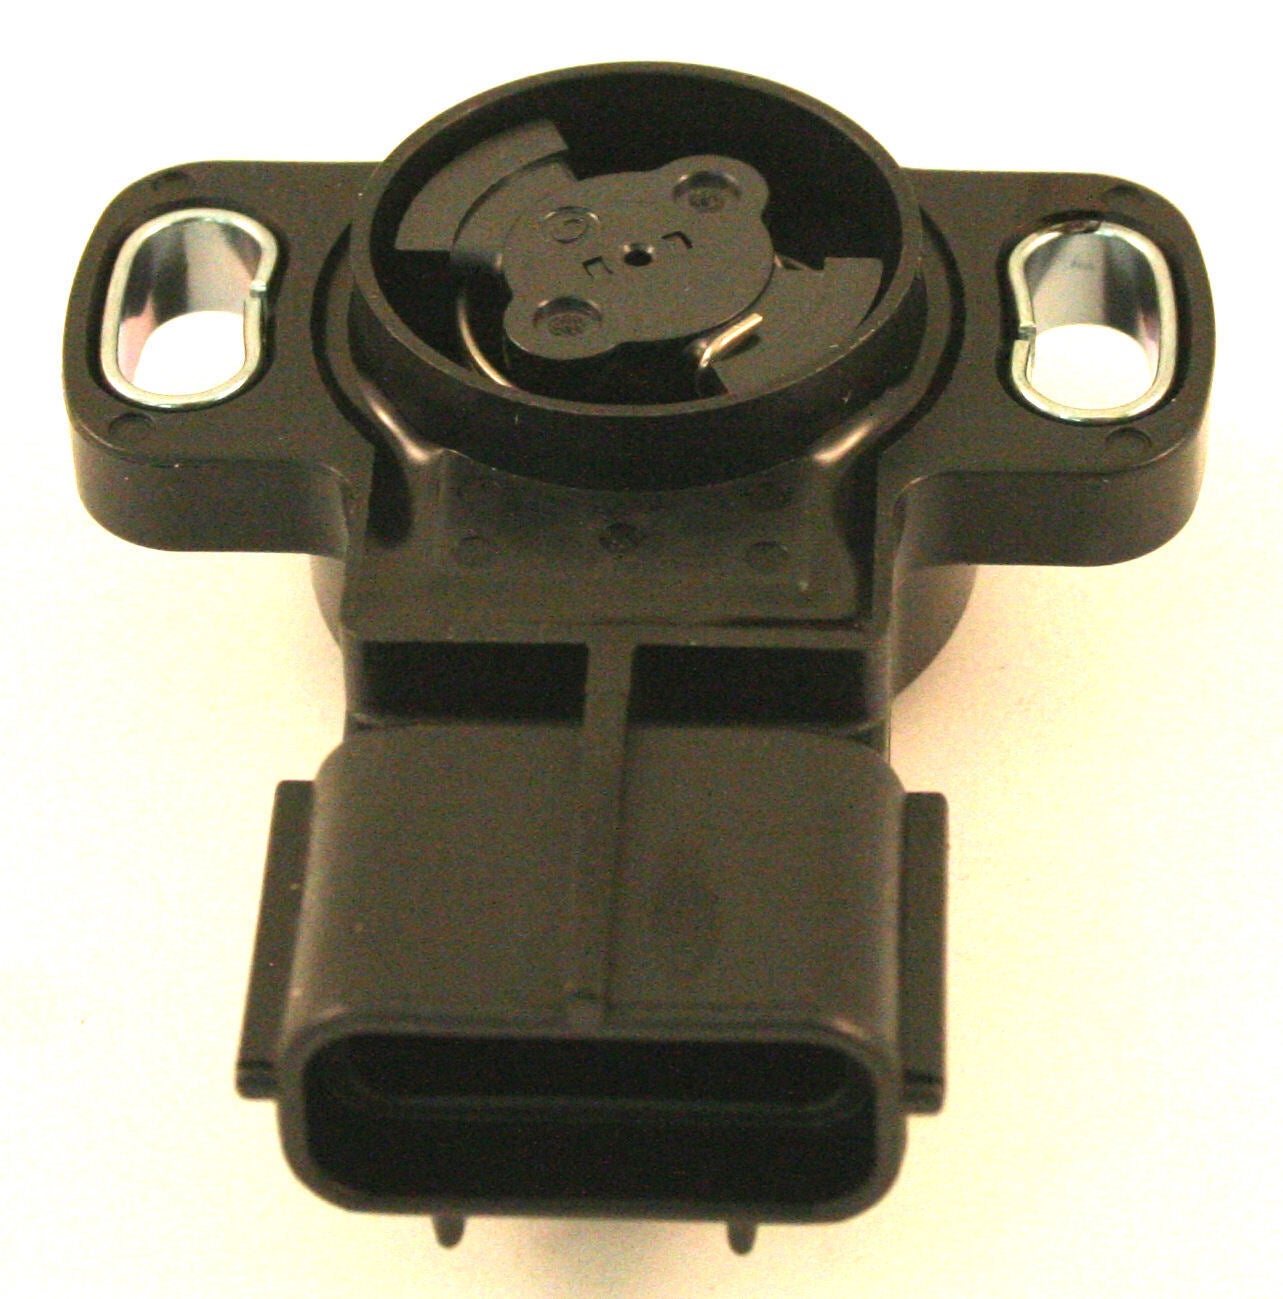 OEM TPS sensor for Suzuki Vitara SE416C 1/96 - 12/96 G16B DOHC 16v MPFI 4cyl 1.6L Manual 4WD 2D Soft Top 